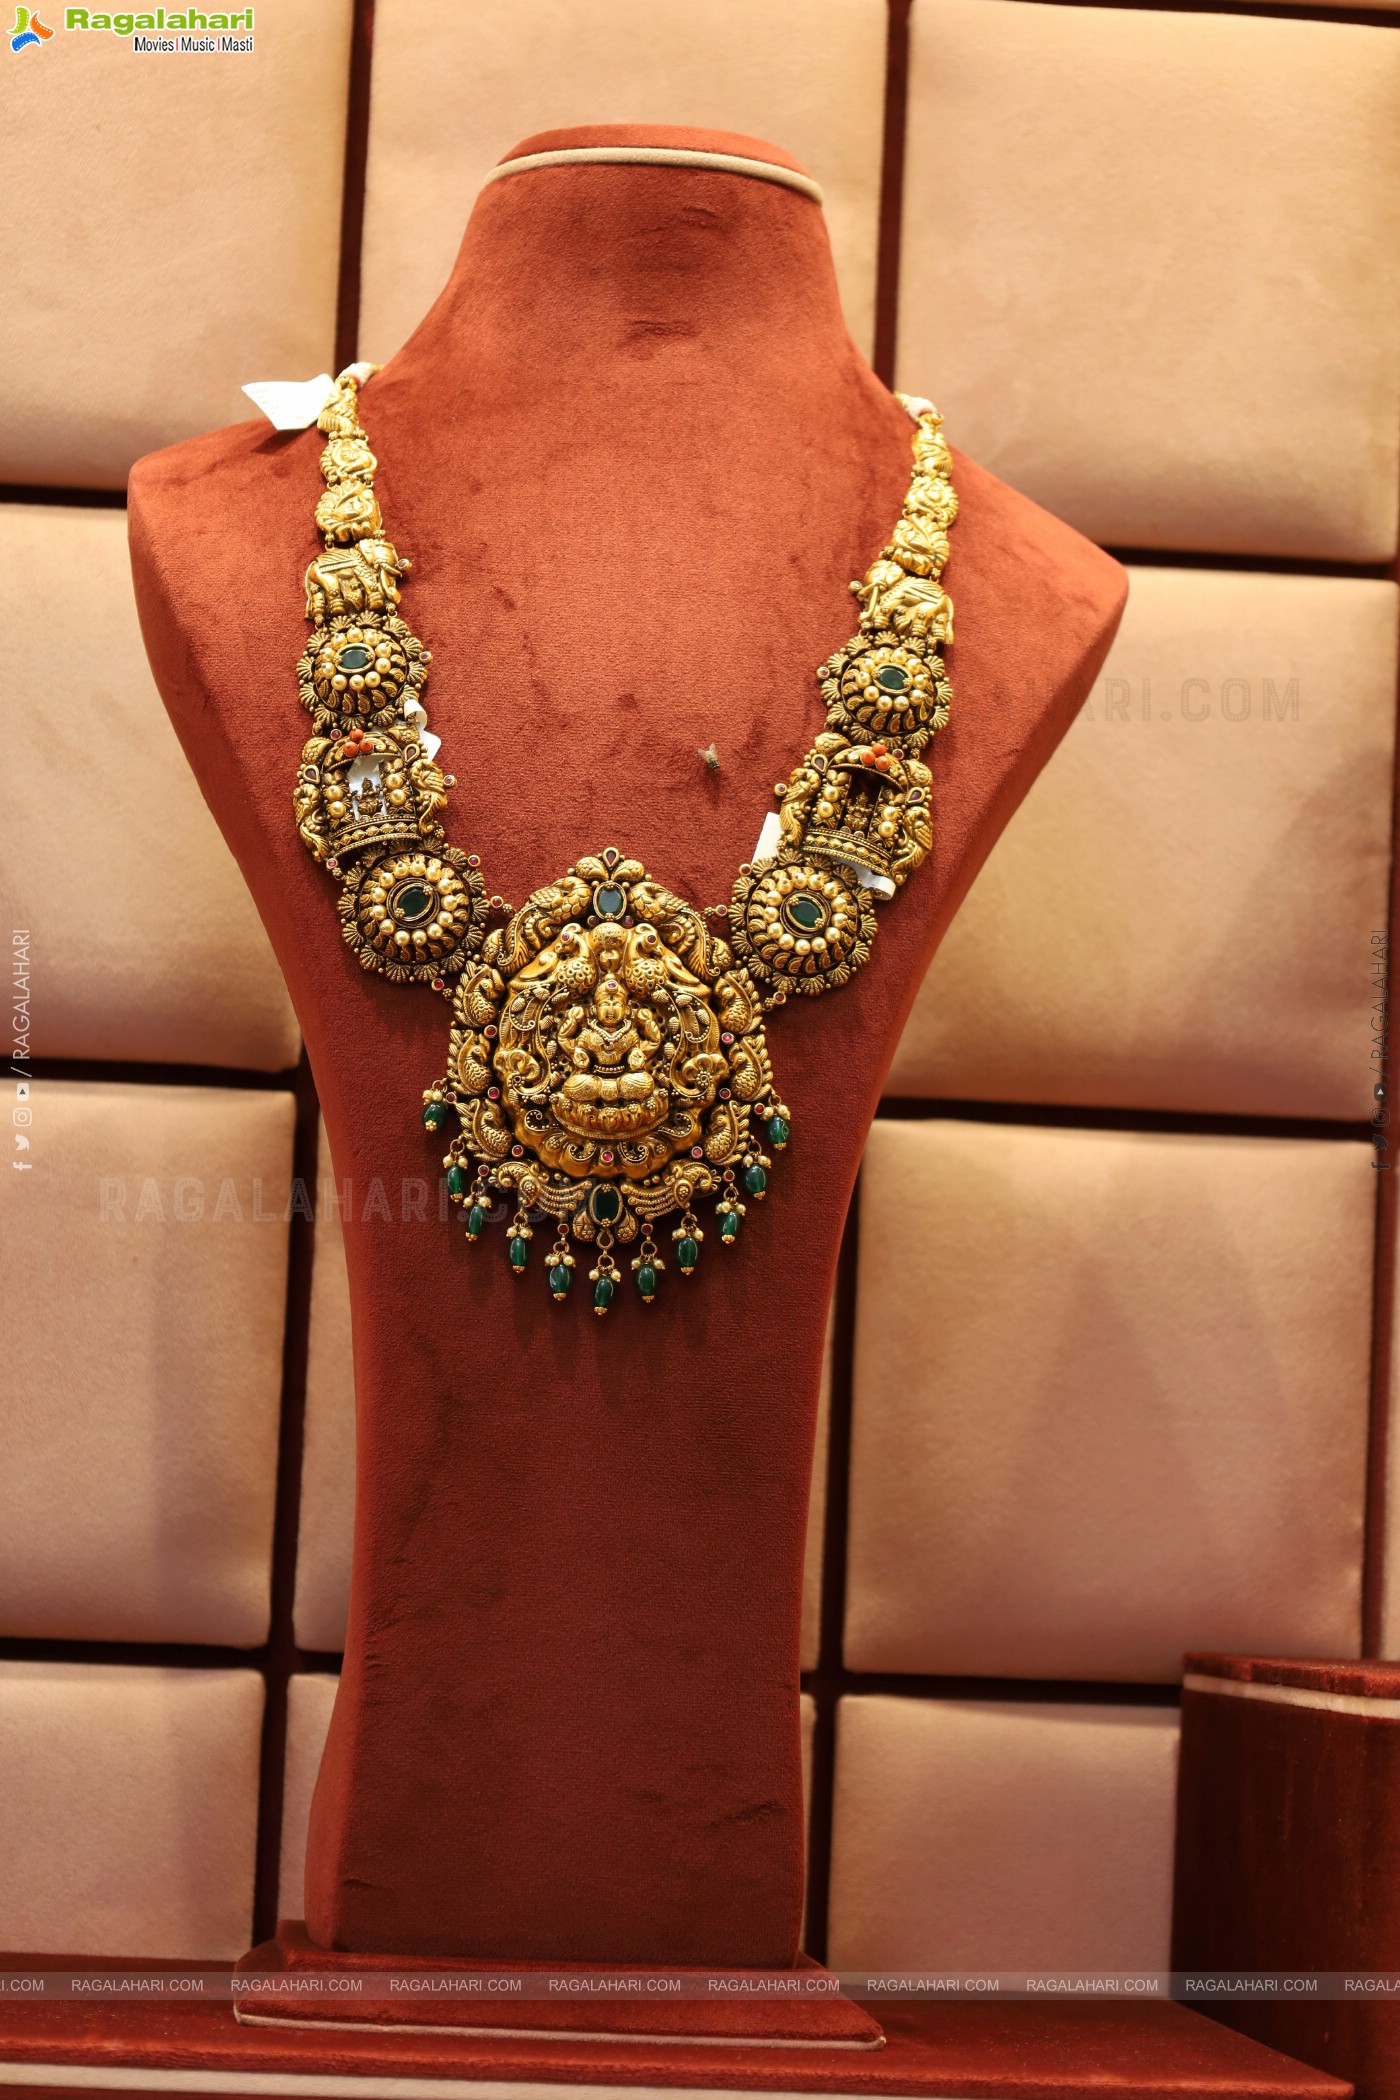 Vega Sri Gold and Diamonds Launch Luxury Jewellery Line - Vega Sri Luxe